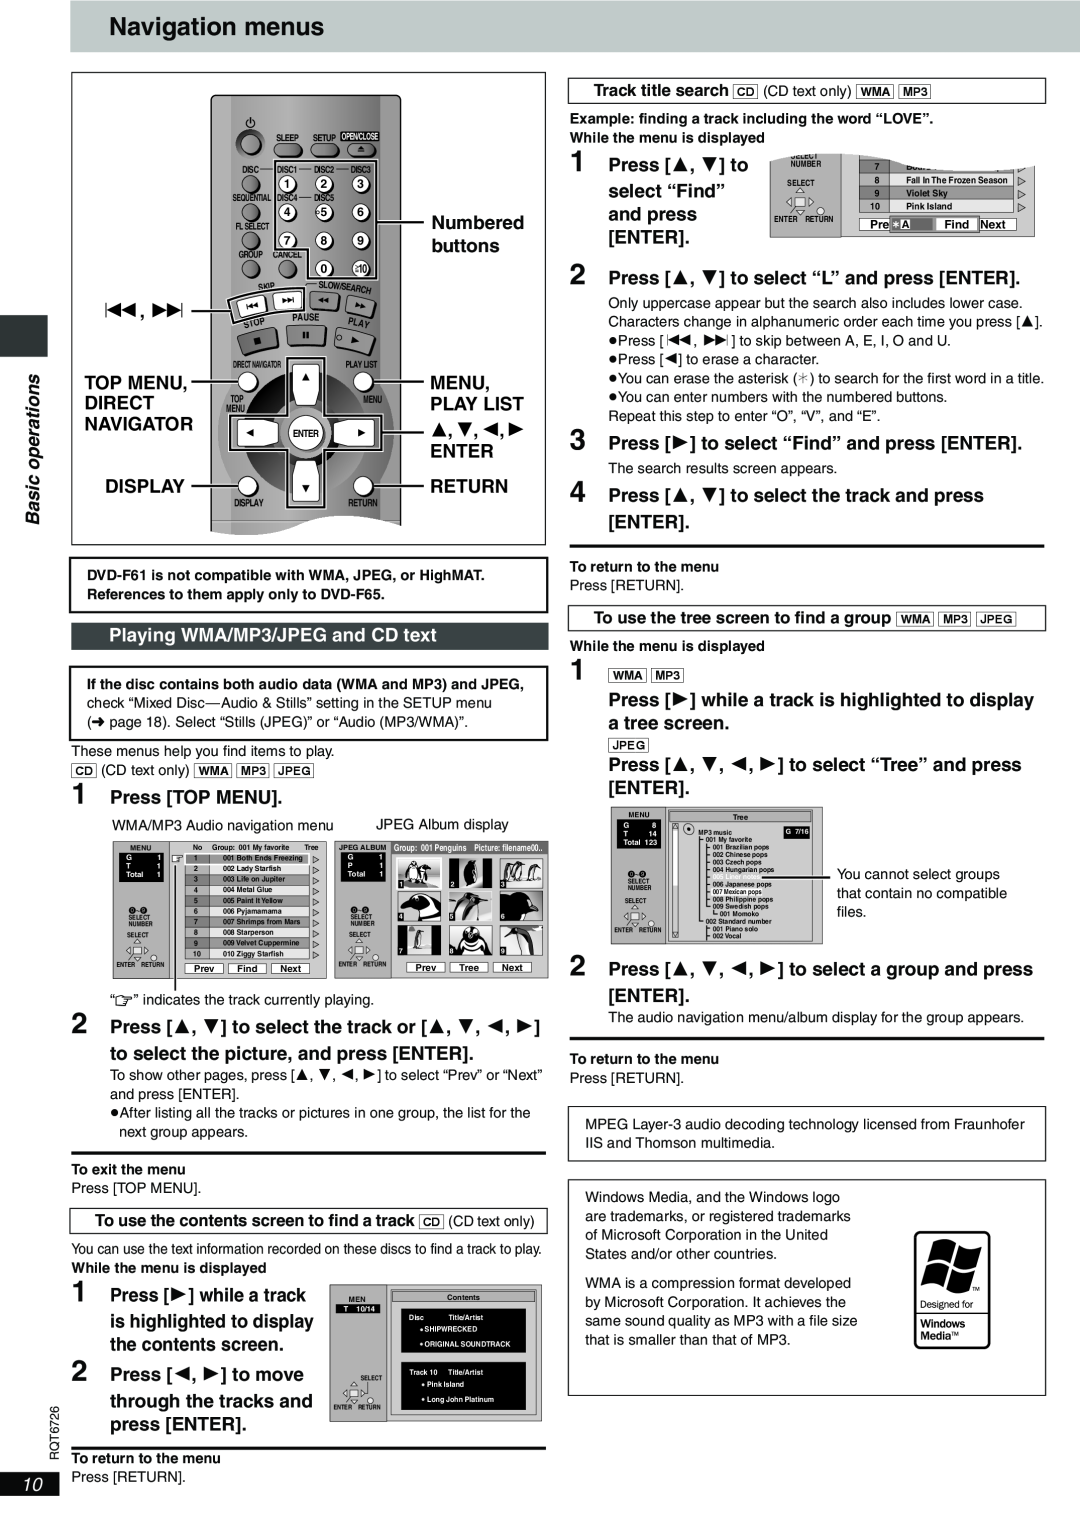 Panasonic DVD-F61 important safety instructions Navigation menus, Basic operations, Playing WMA/MP3/JPEG and CD text 